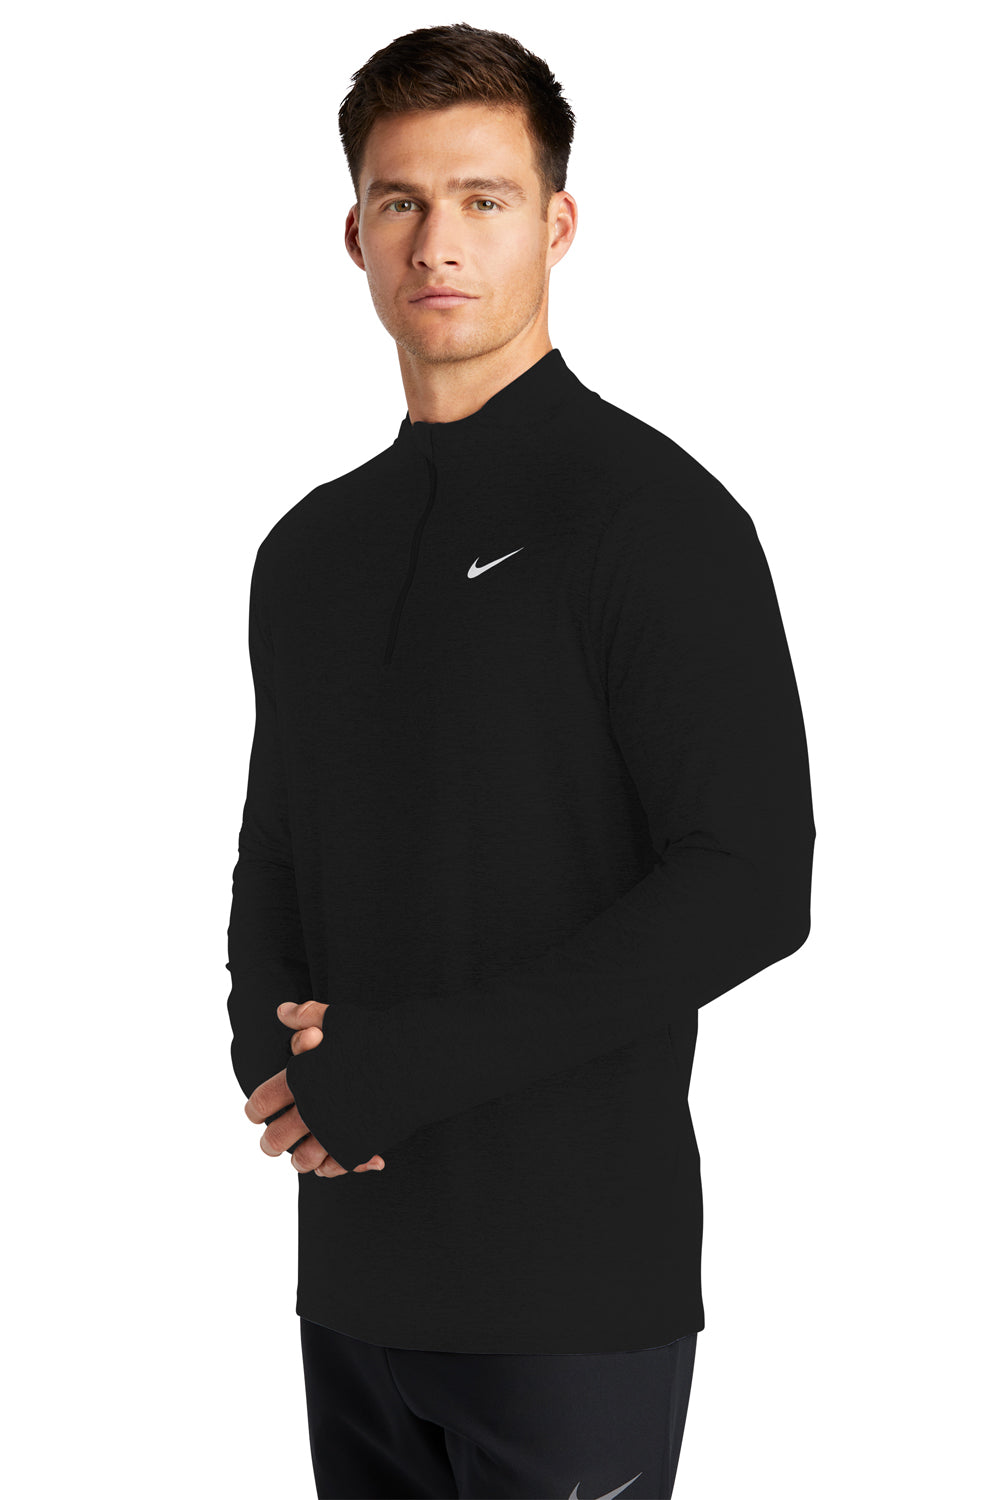 Nike NKDH4949 Mens Element Dri-Fit Moisture Wicking 1/4 Zip Sweatshirt Black Model 3Q